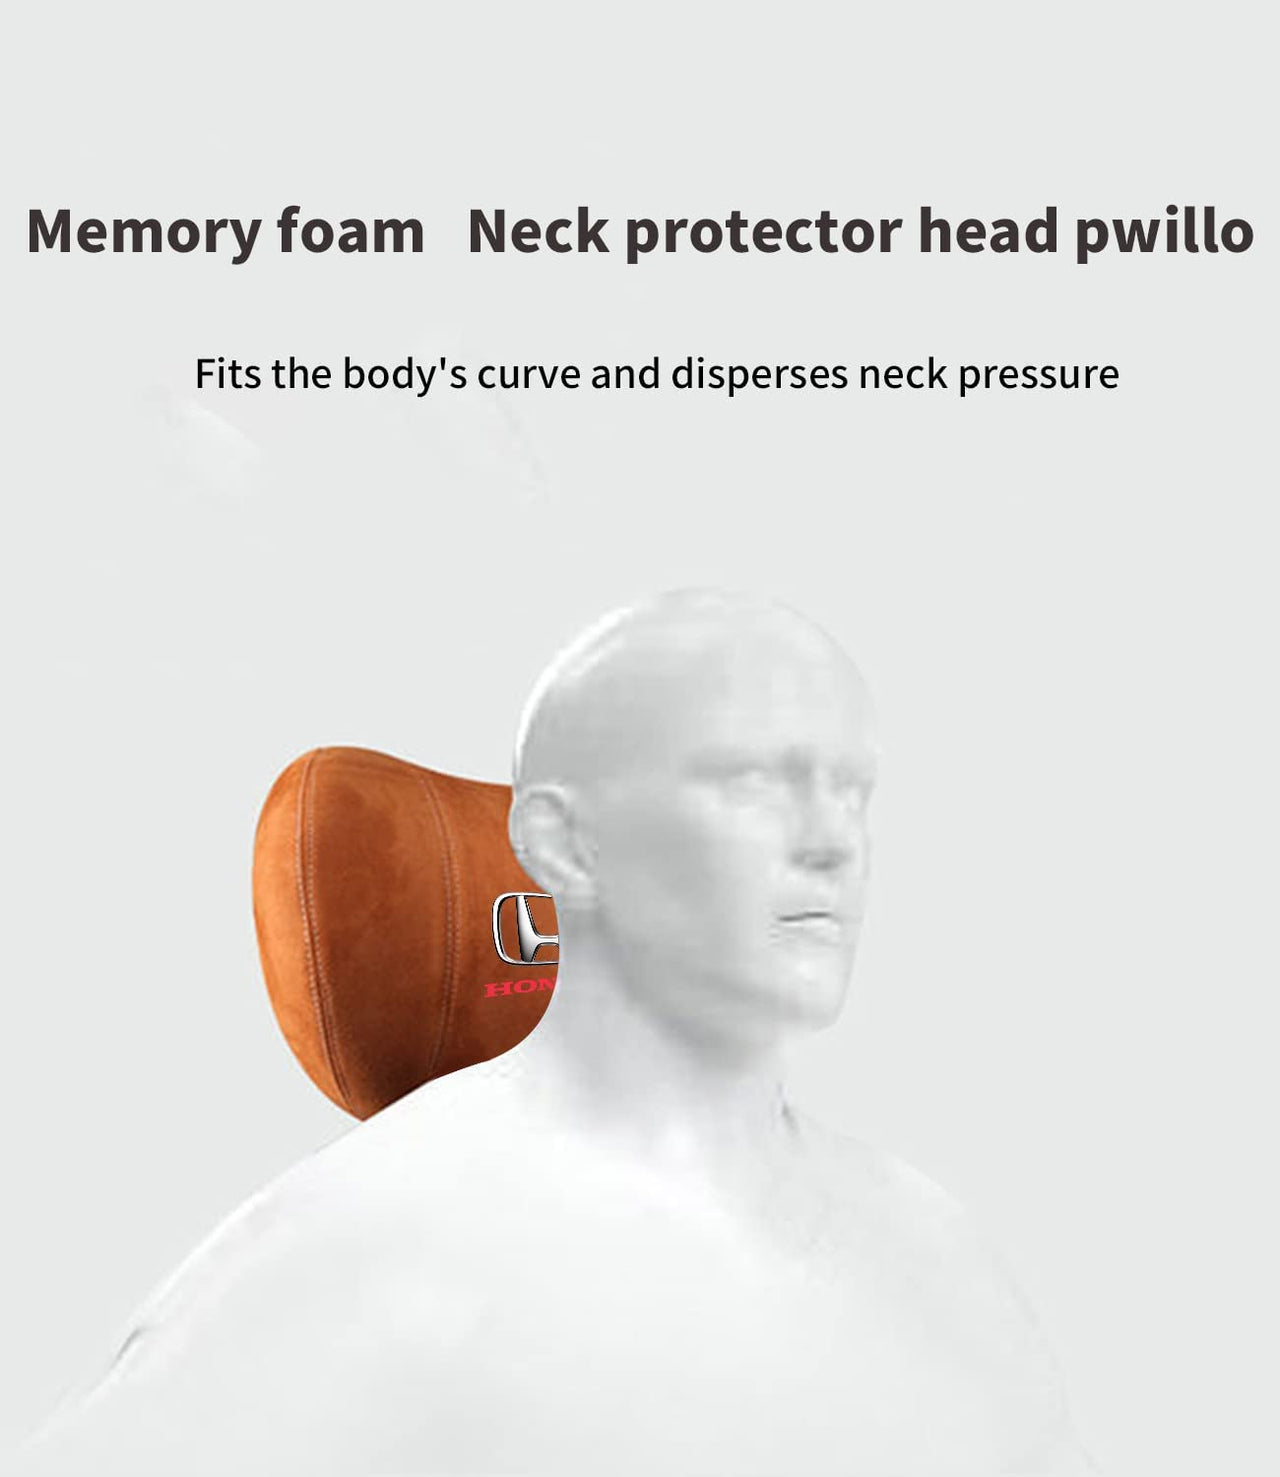 Custom-Fit for Cars, Car Headrest (2 Piece) Premium Memory Foam Car Neck Pillow with Logo